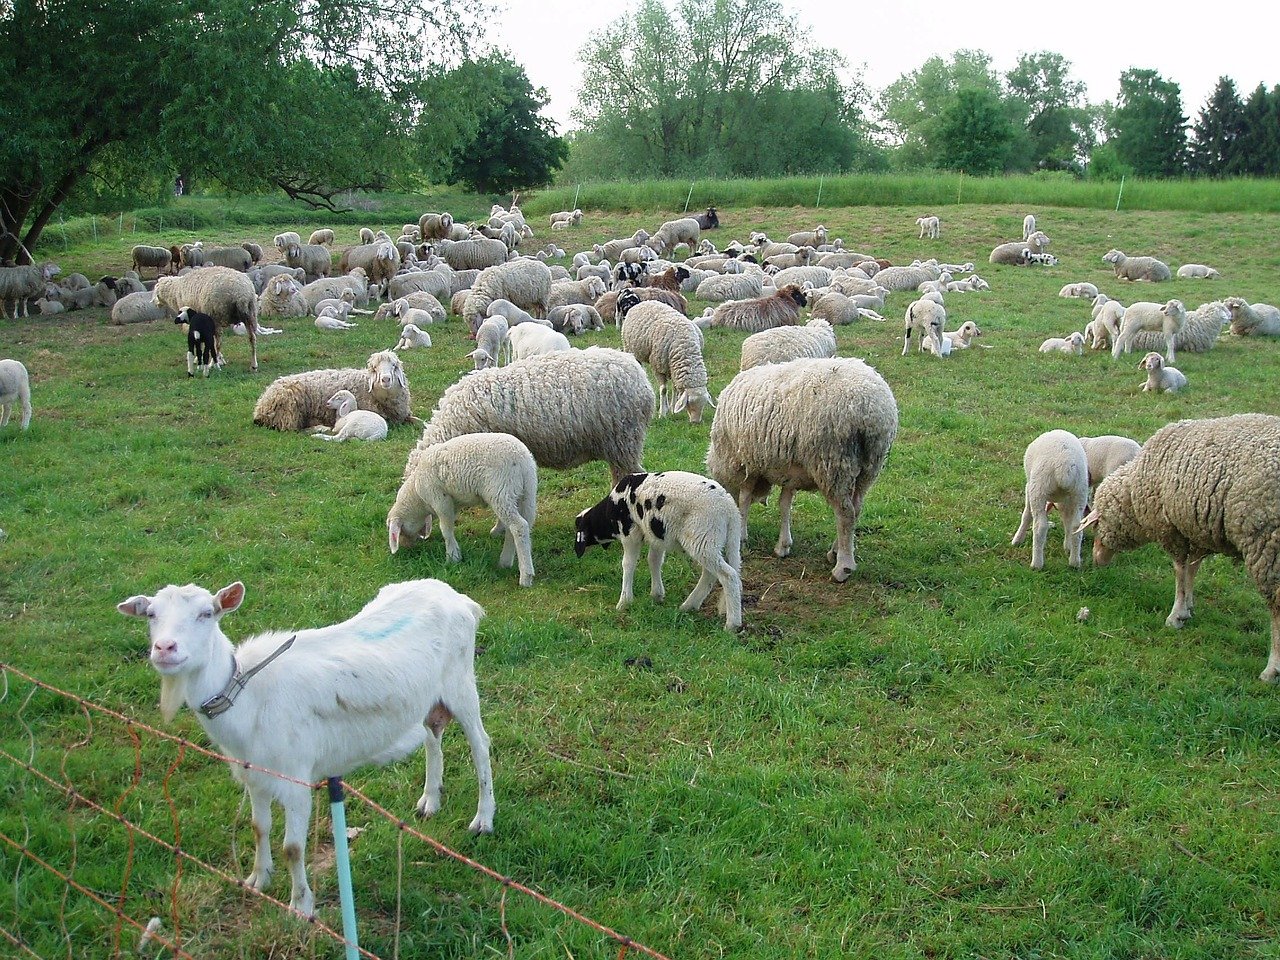 'They're baaaaack': Two dozen goats eat their way through New York park